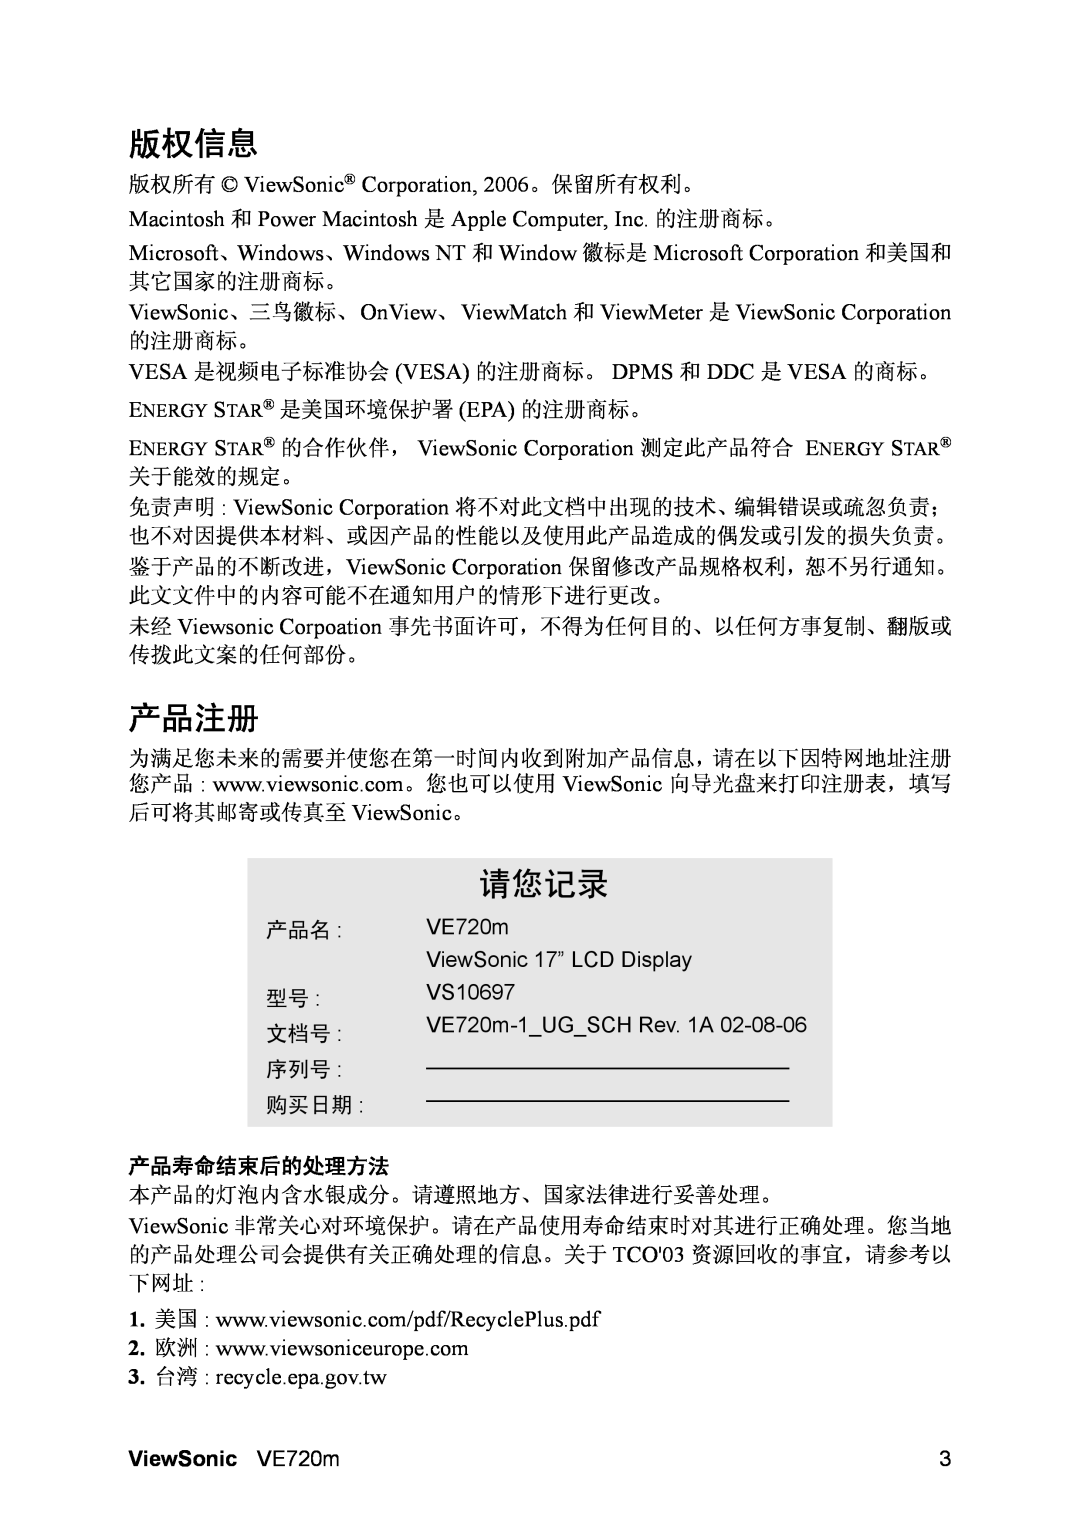 ViewSonic VS10697 manual 版权信息, 产品注册, 请您记录, 3. 台湾 recycle.epa.gov.tw, 产品寿命结束后的处理方法, ViewSonic VE720m 